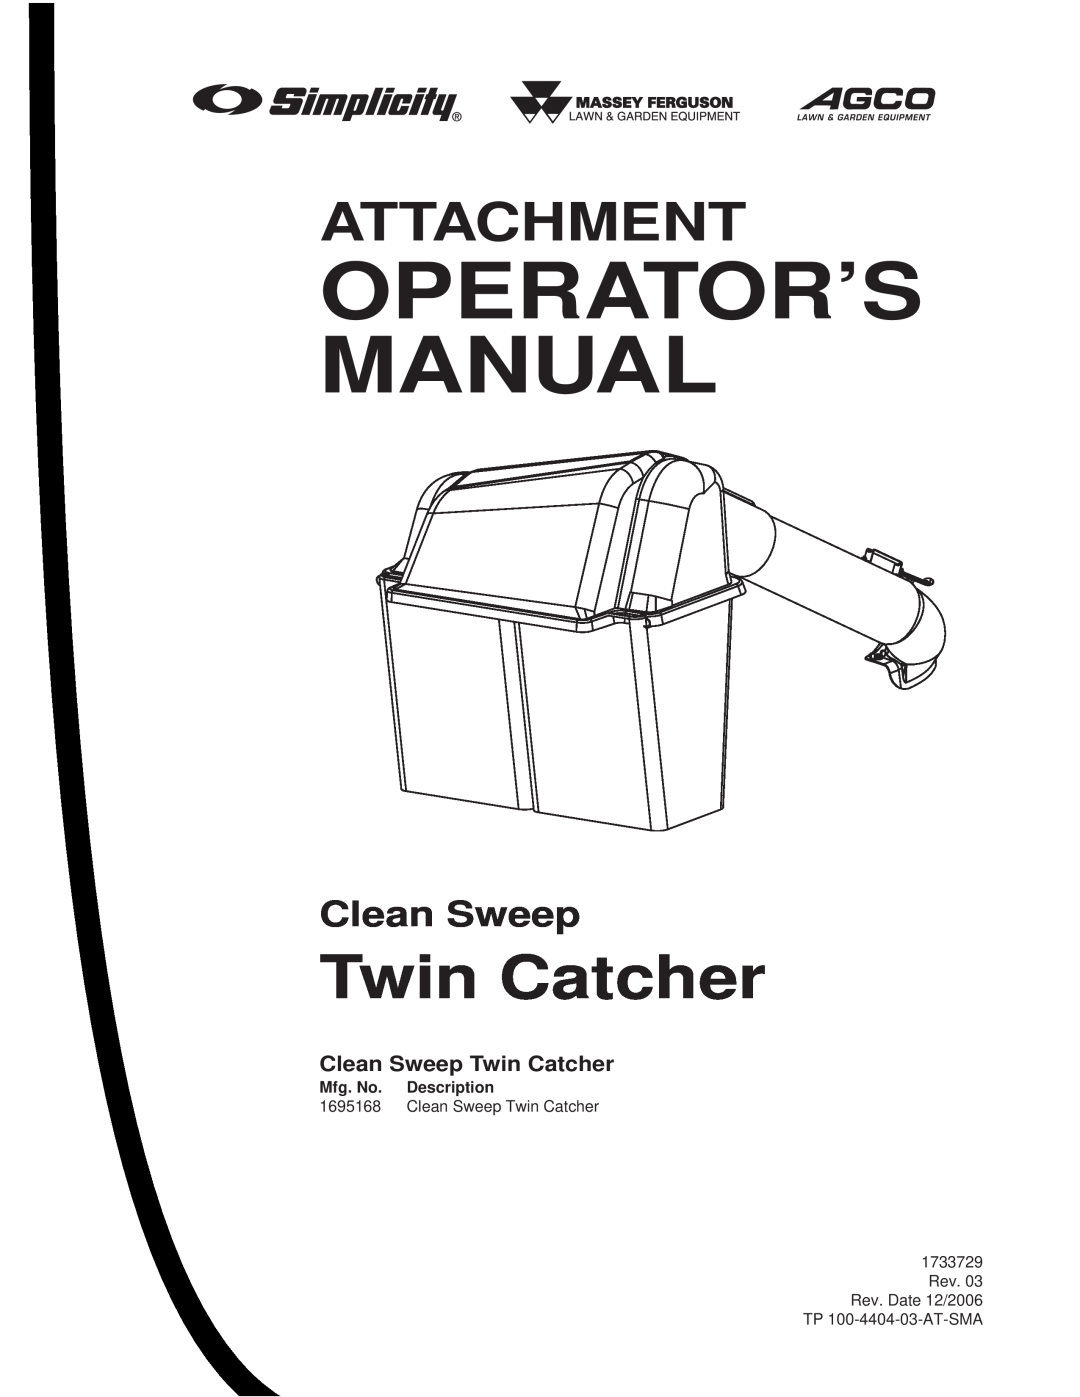 Snapper 1695168, 1733729 manual Clean Sweep Twin Catcher, Operator’S Manual, Attachment, Mfg. No. Description 